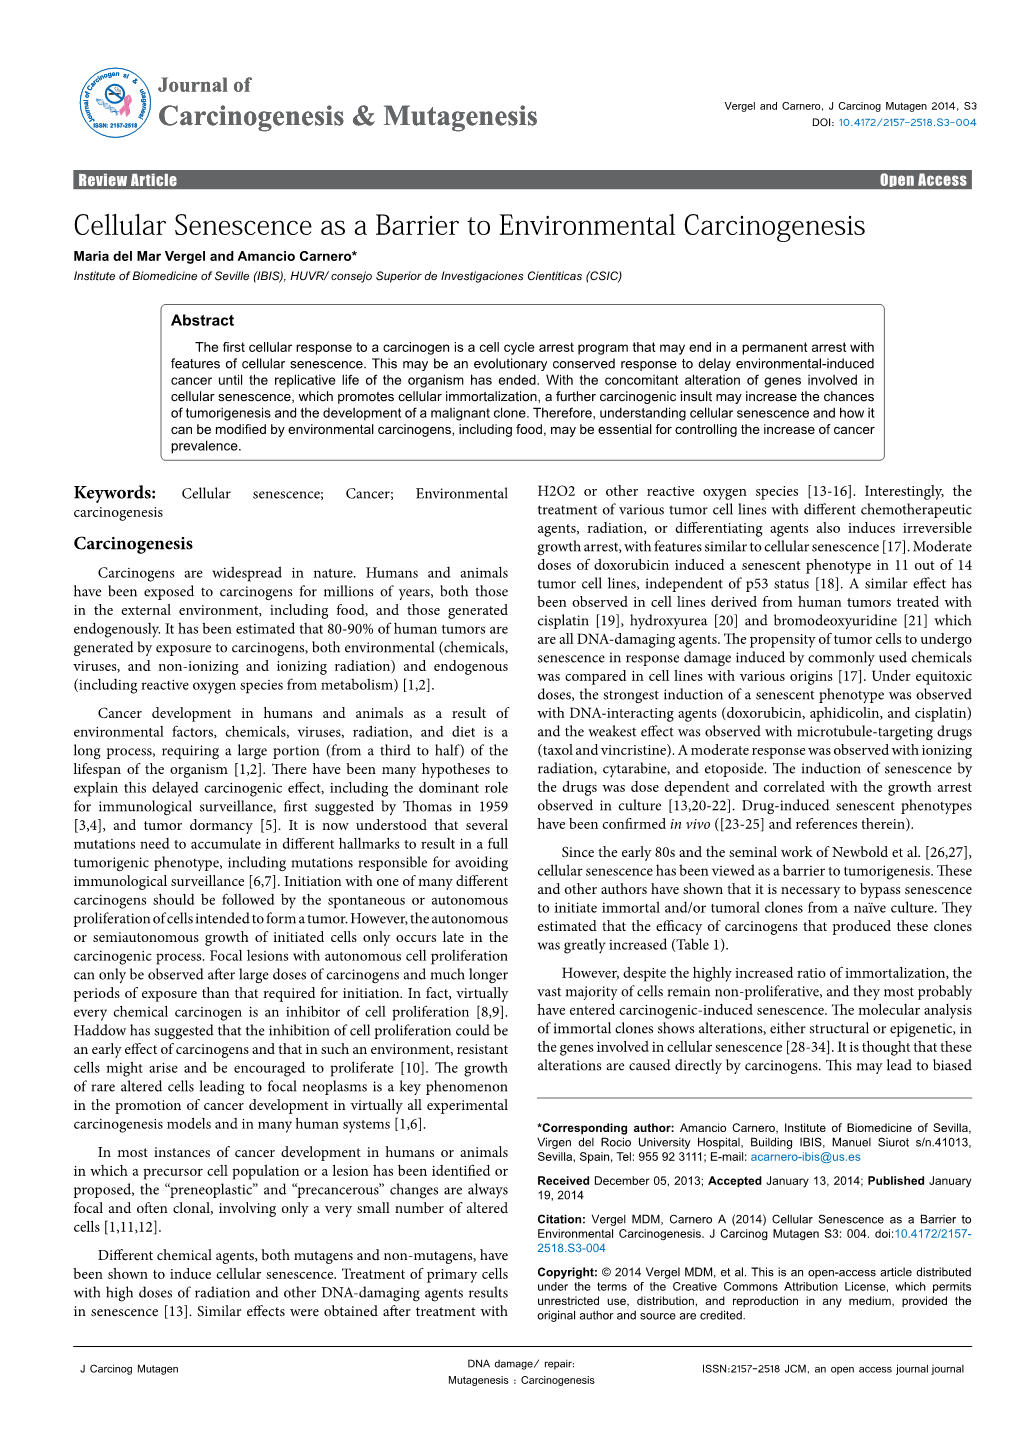 Cellular Senescence As a Barrier to Environmental Carcinogenesis